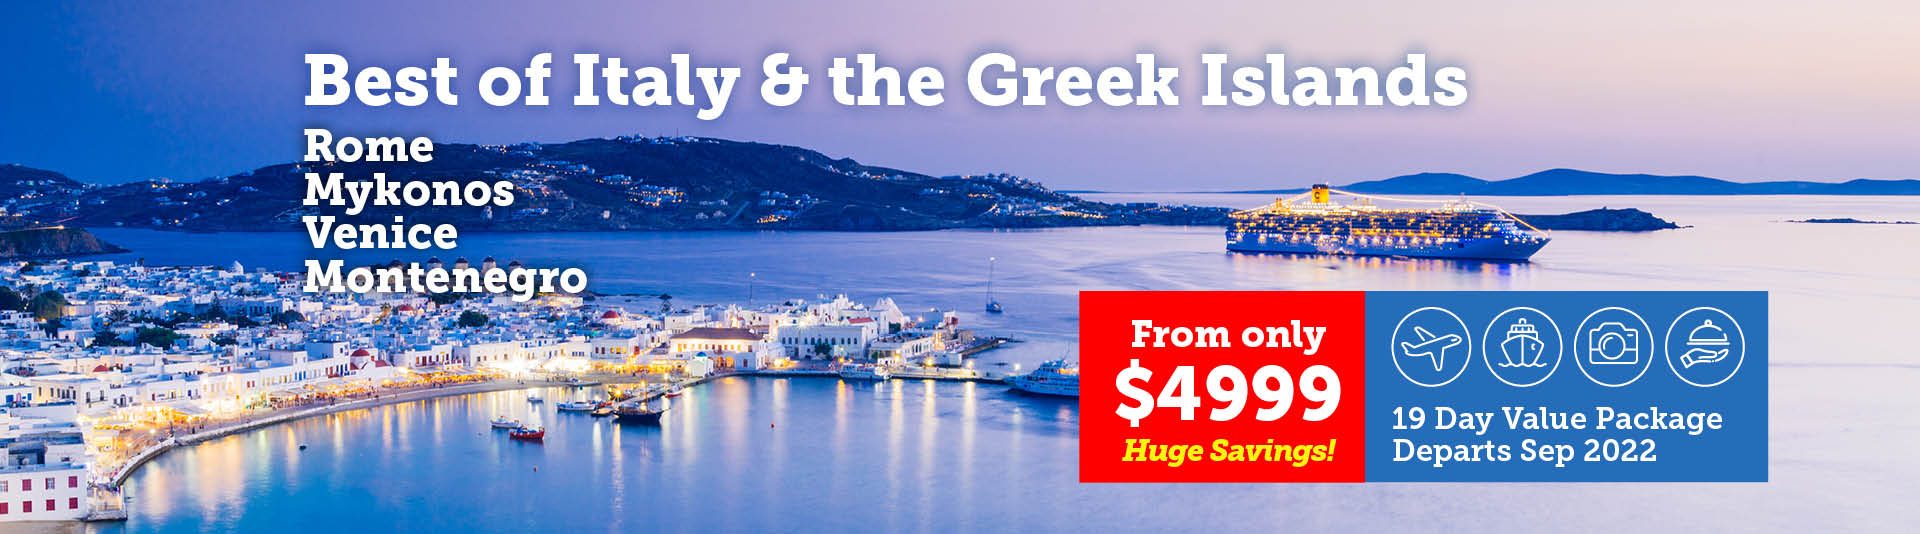 best-italy-greek-island-sep-2022-1.jpg